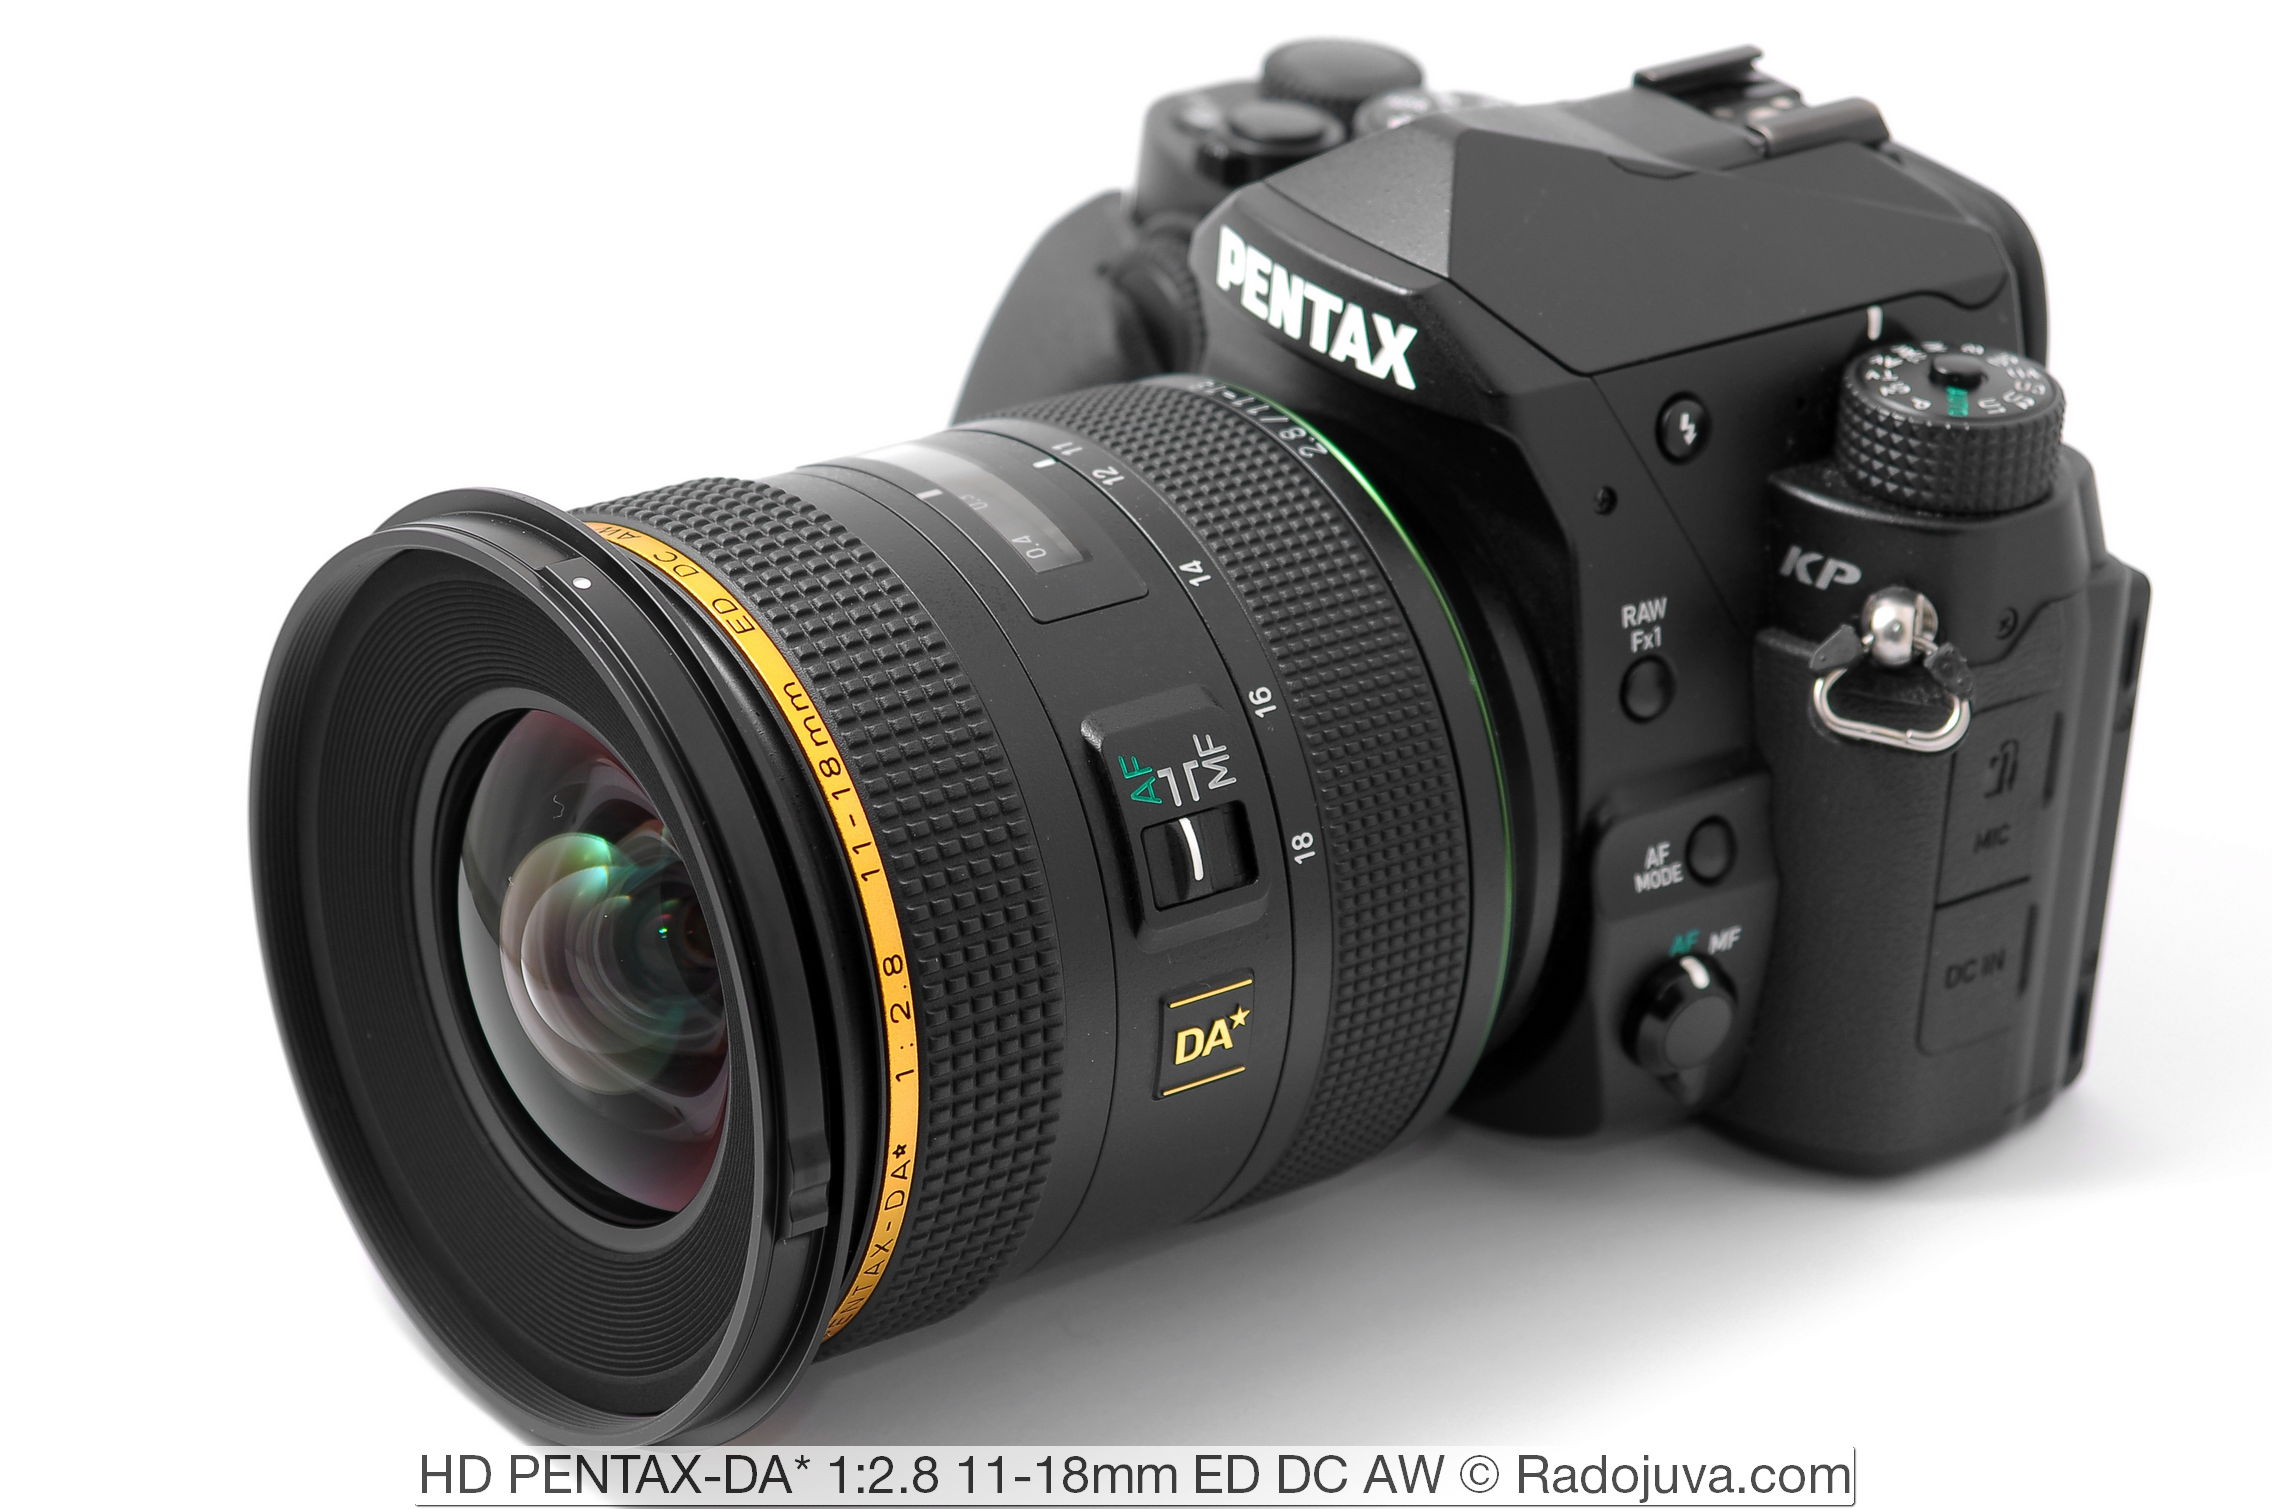 HD PENTAX-DA* 1:2.8 11-18mm ED DC AW